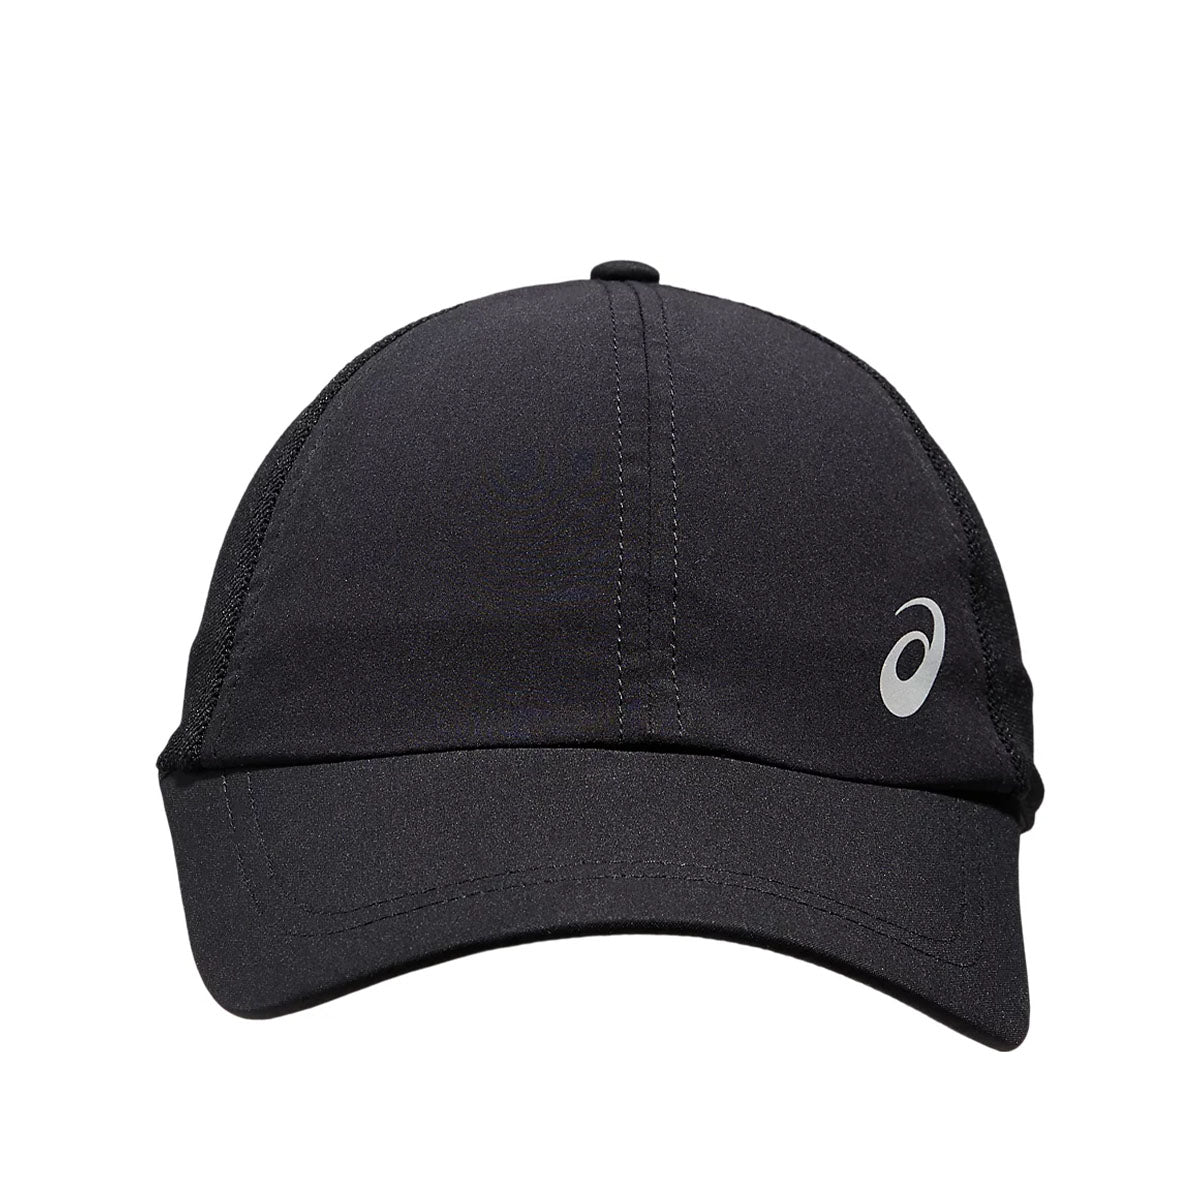 Asics Esnt Cap Black כובע אסיקס